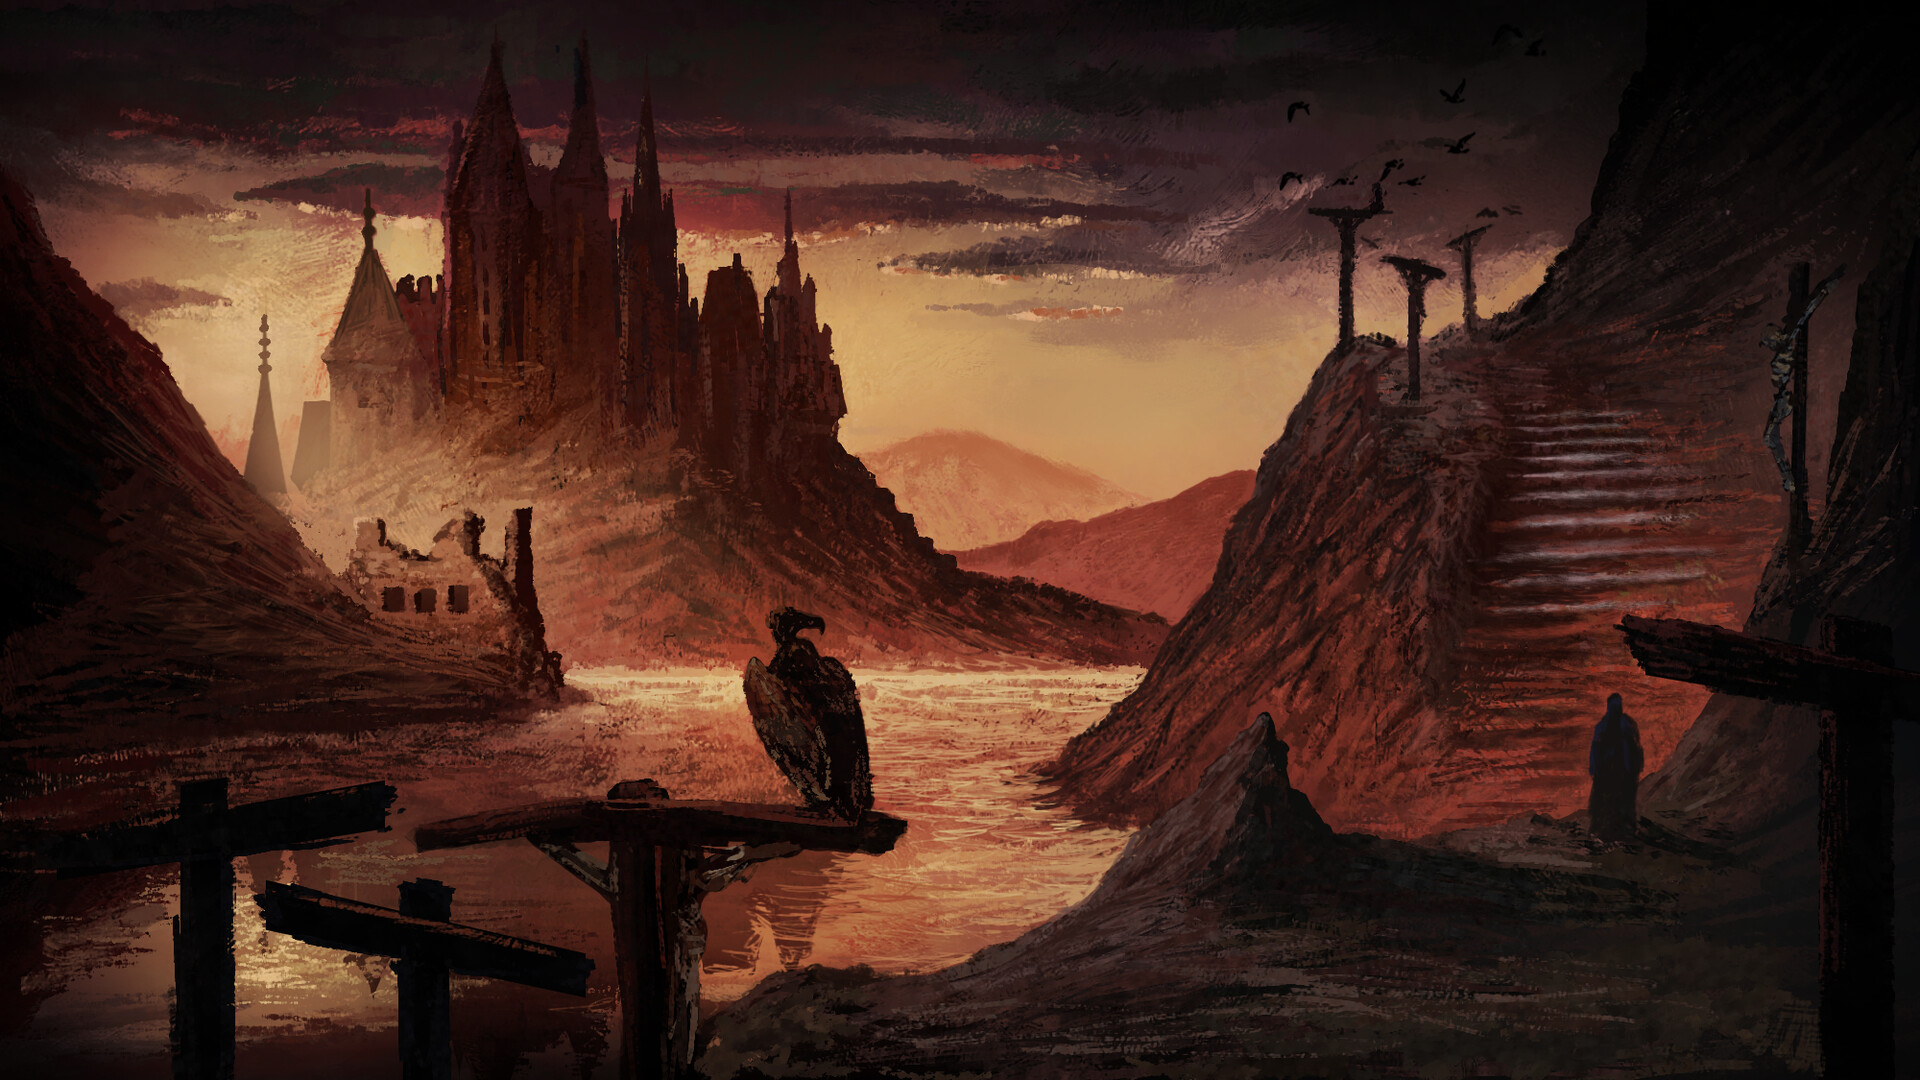 Dark Fantasy Landscape